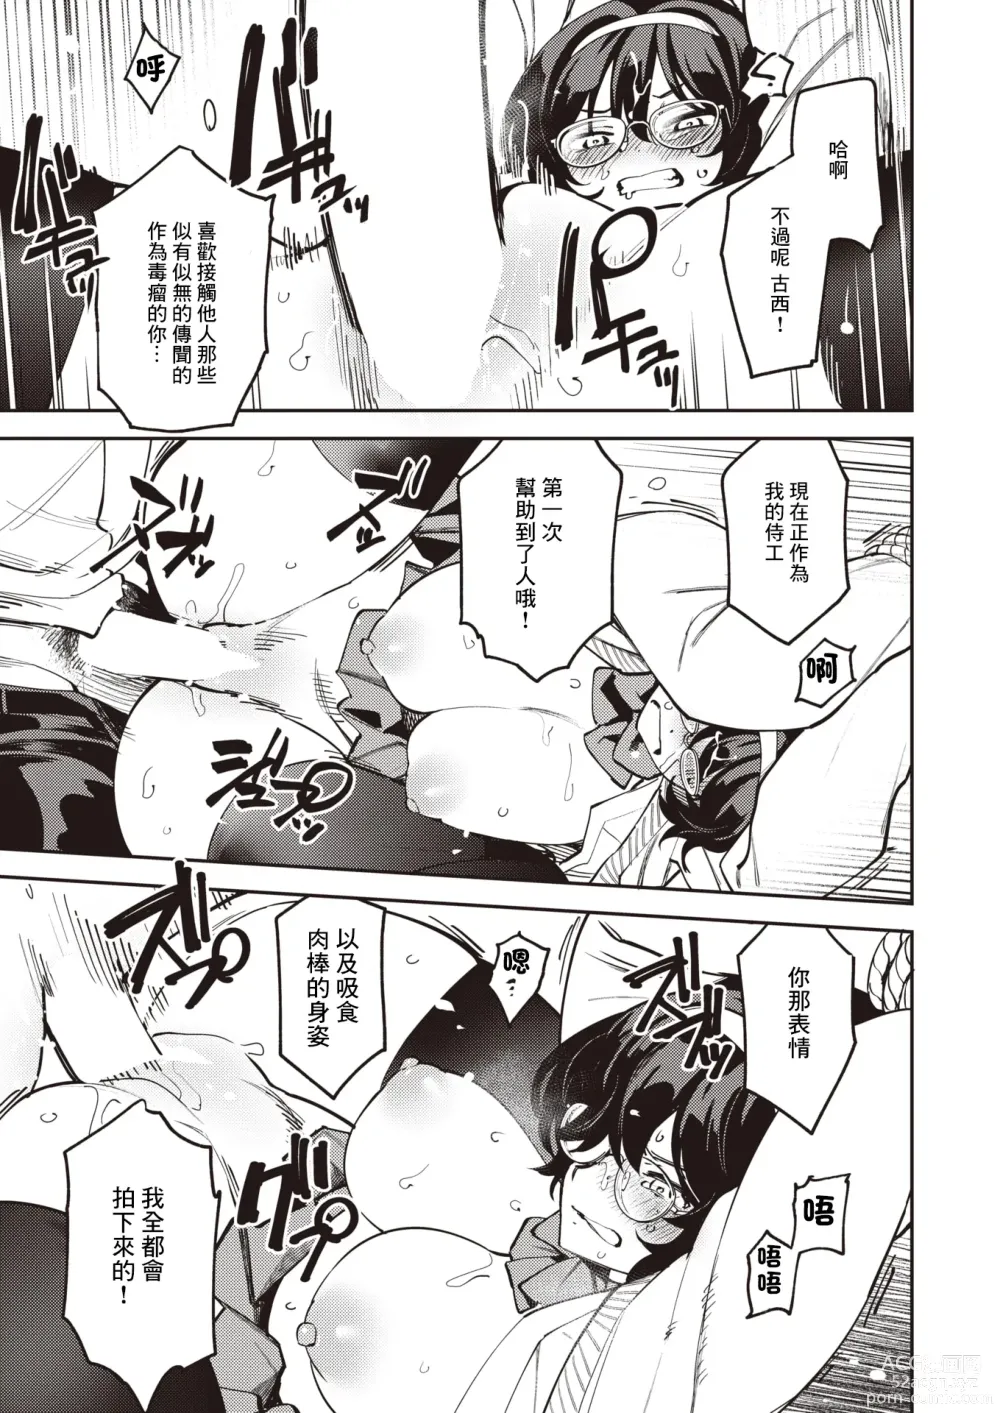 Page 15 of manga Wakarase Filming